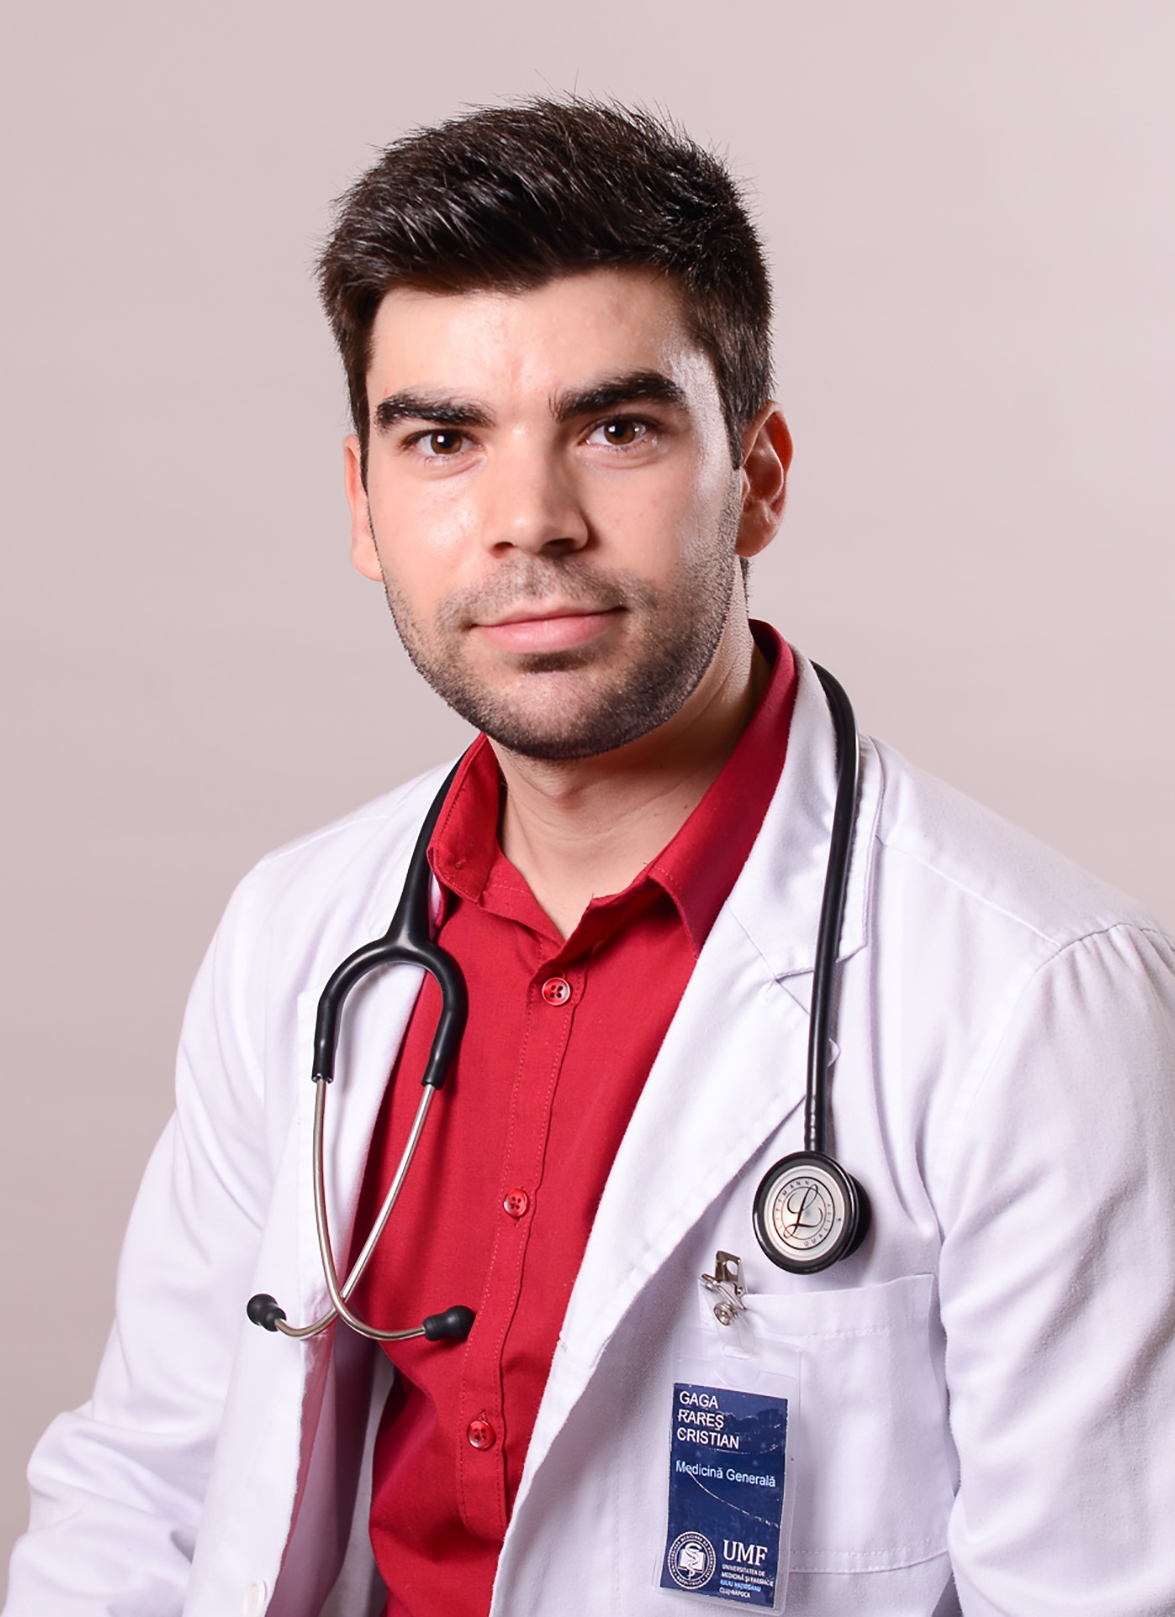 Dr. Cristian Gaga